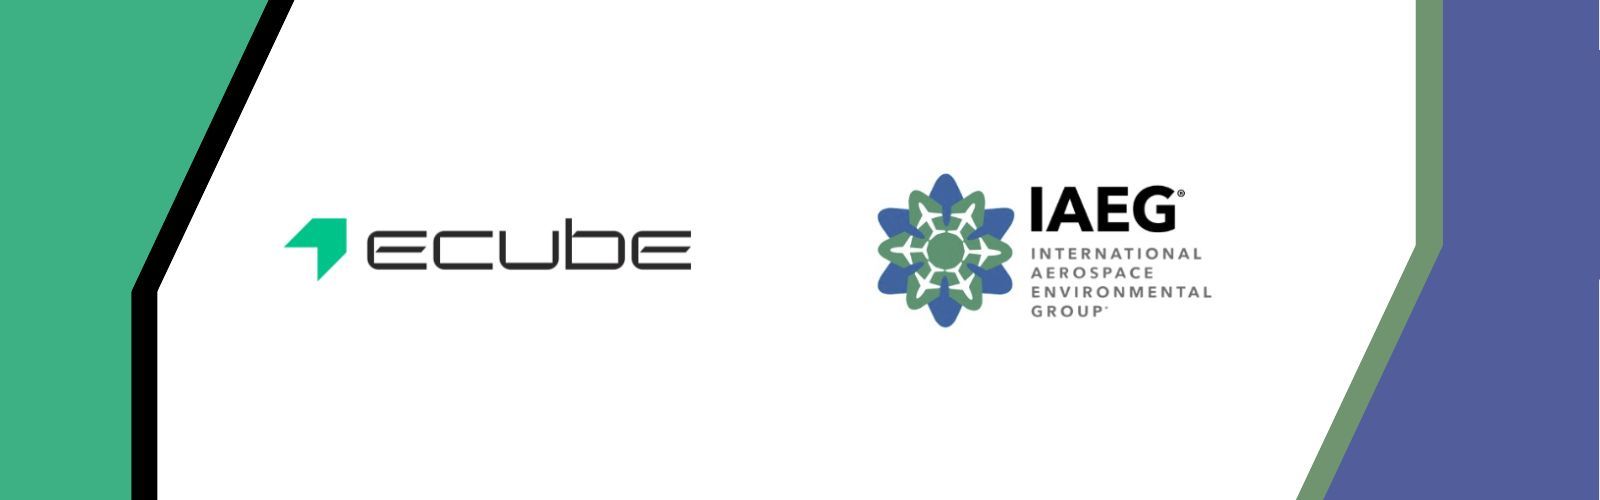 ecube joins IAEG as Liaison Member